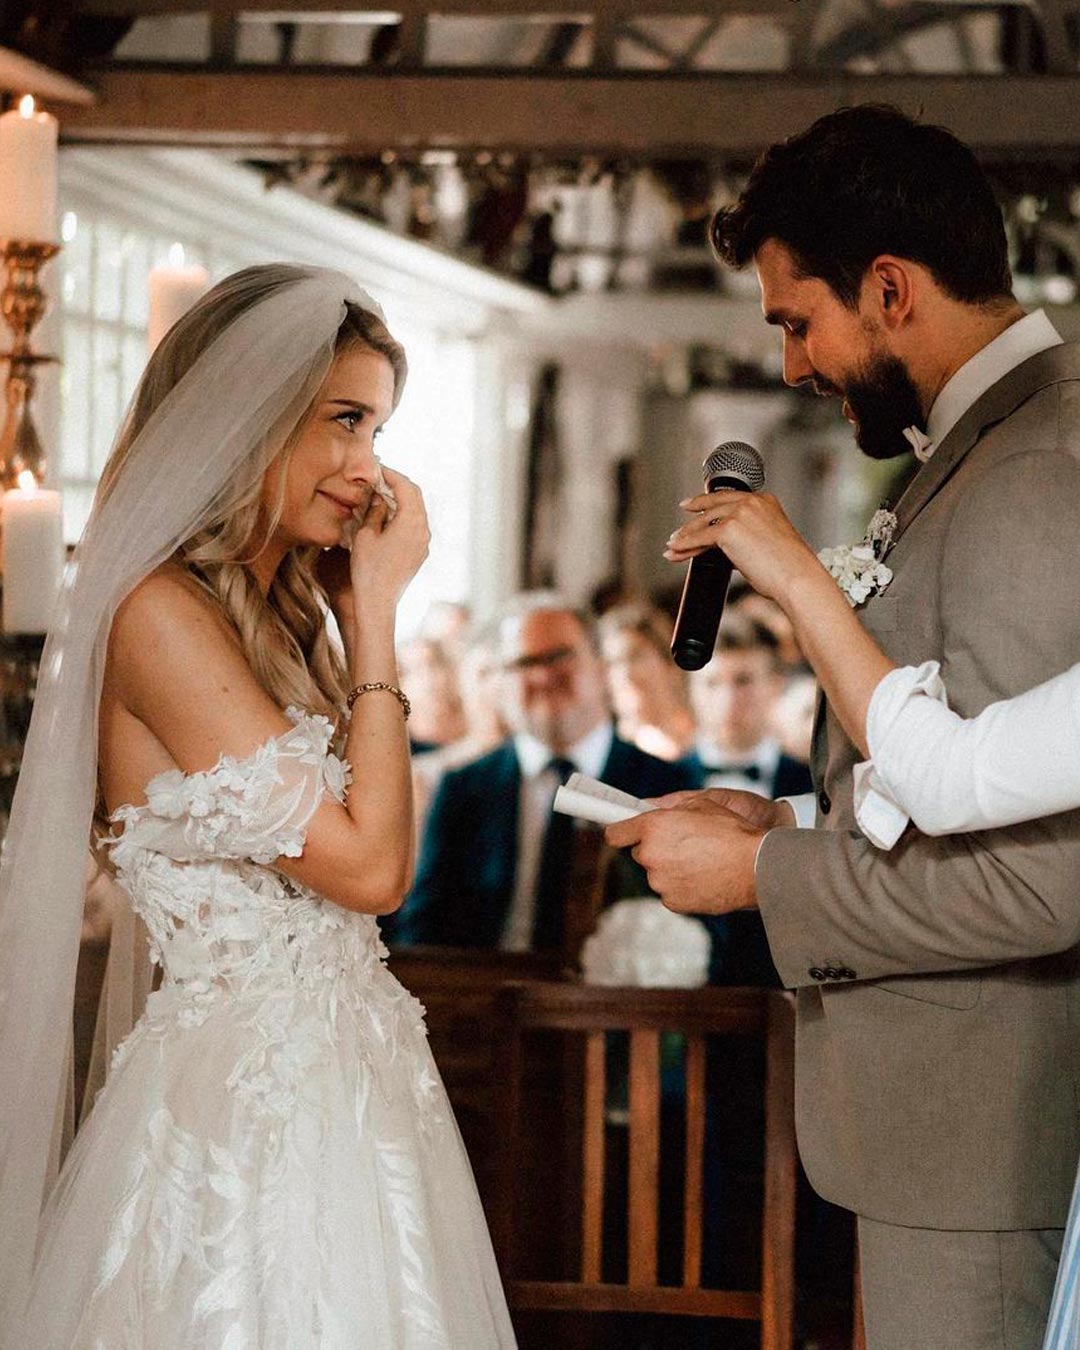 step-step-writing-wedding vows bride groom long time